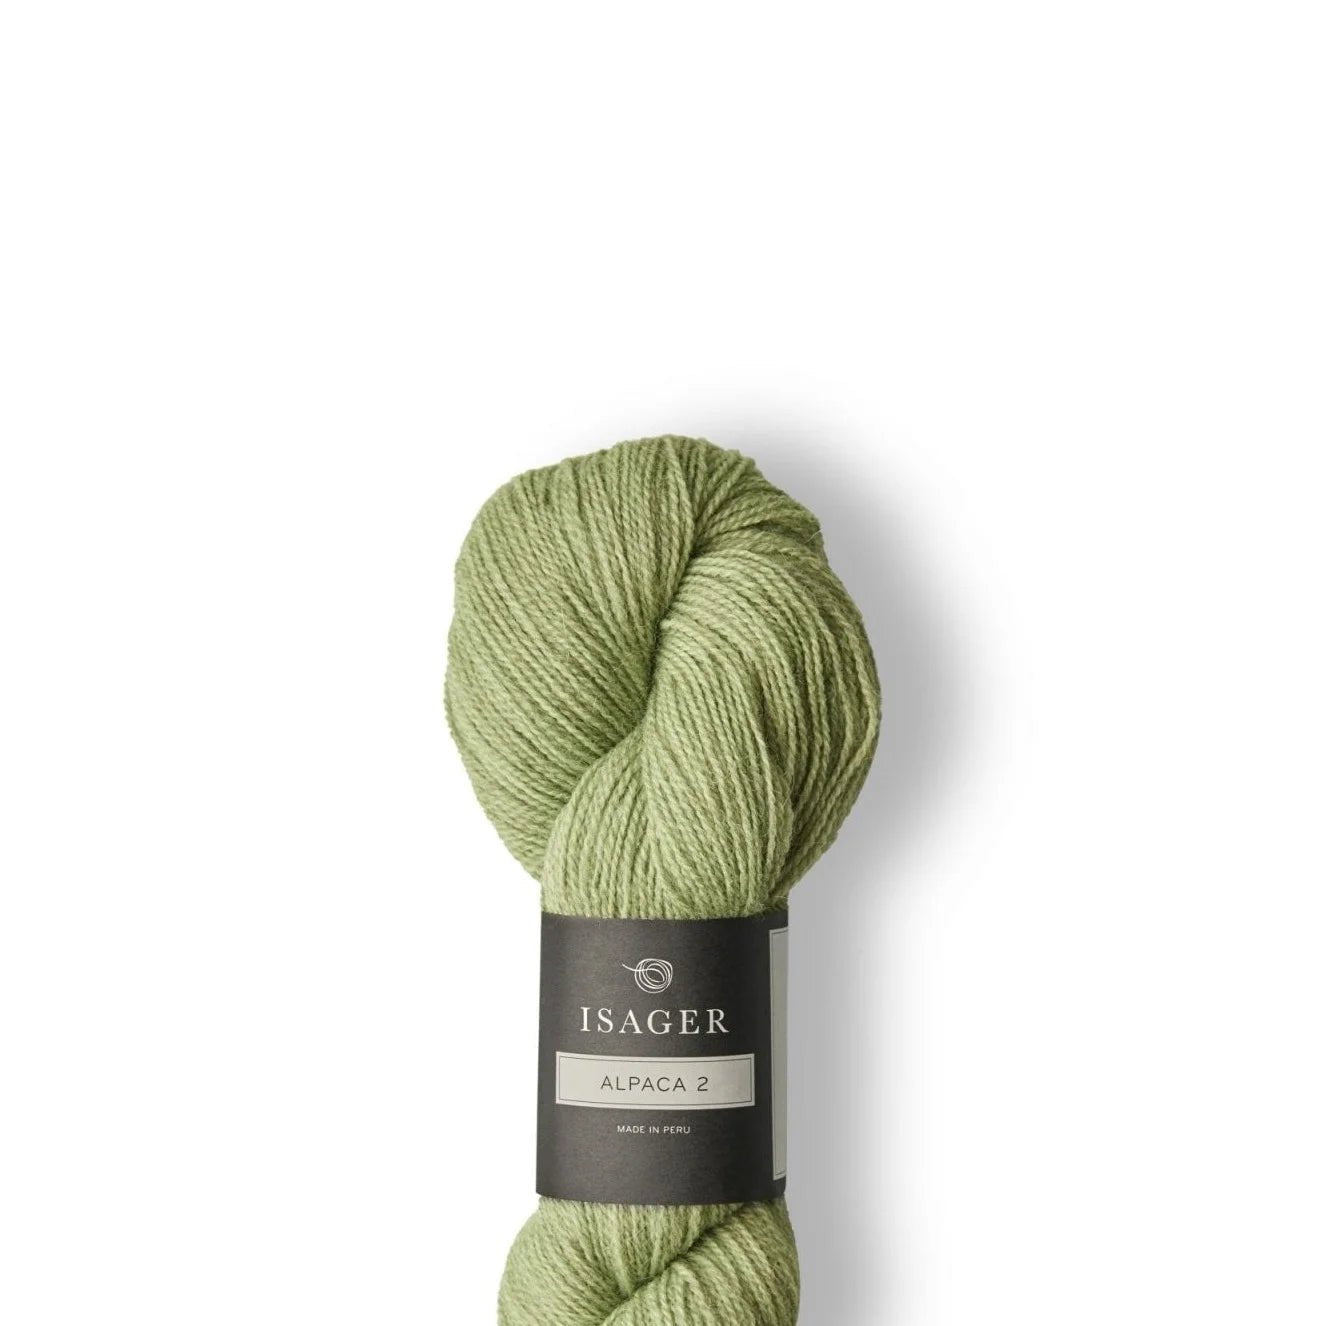 Isager Alpaca 2 - 46 - 4 Ply - Alpaca - The Little Yarn Store